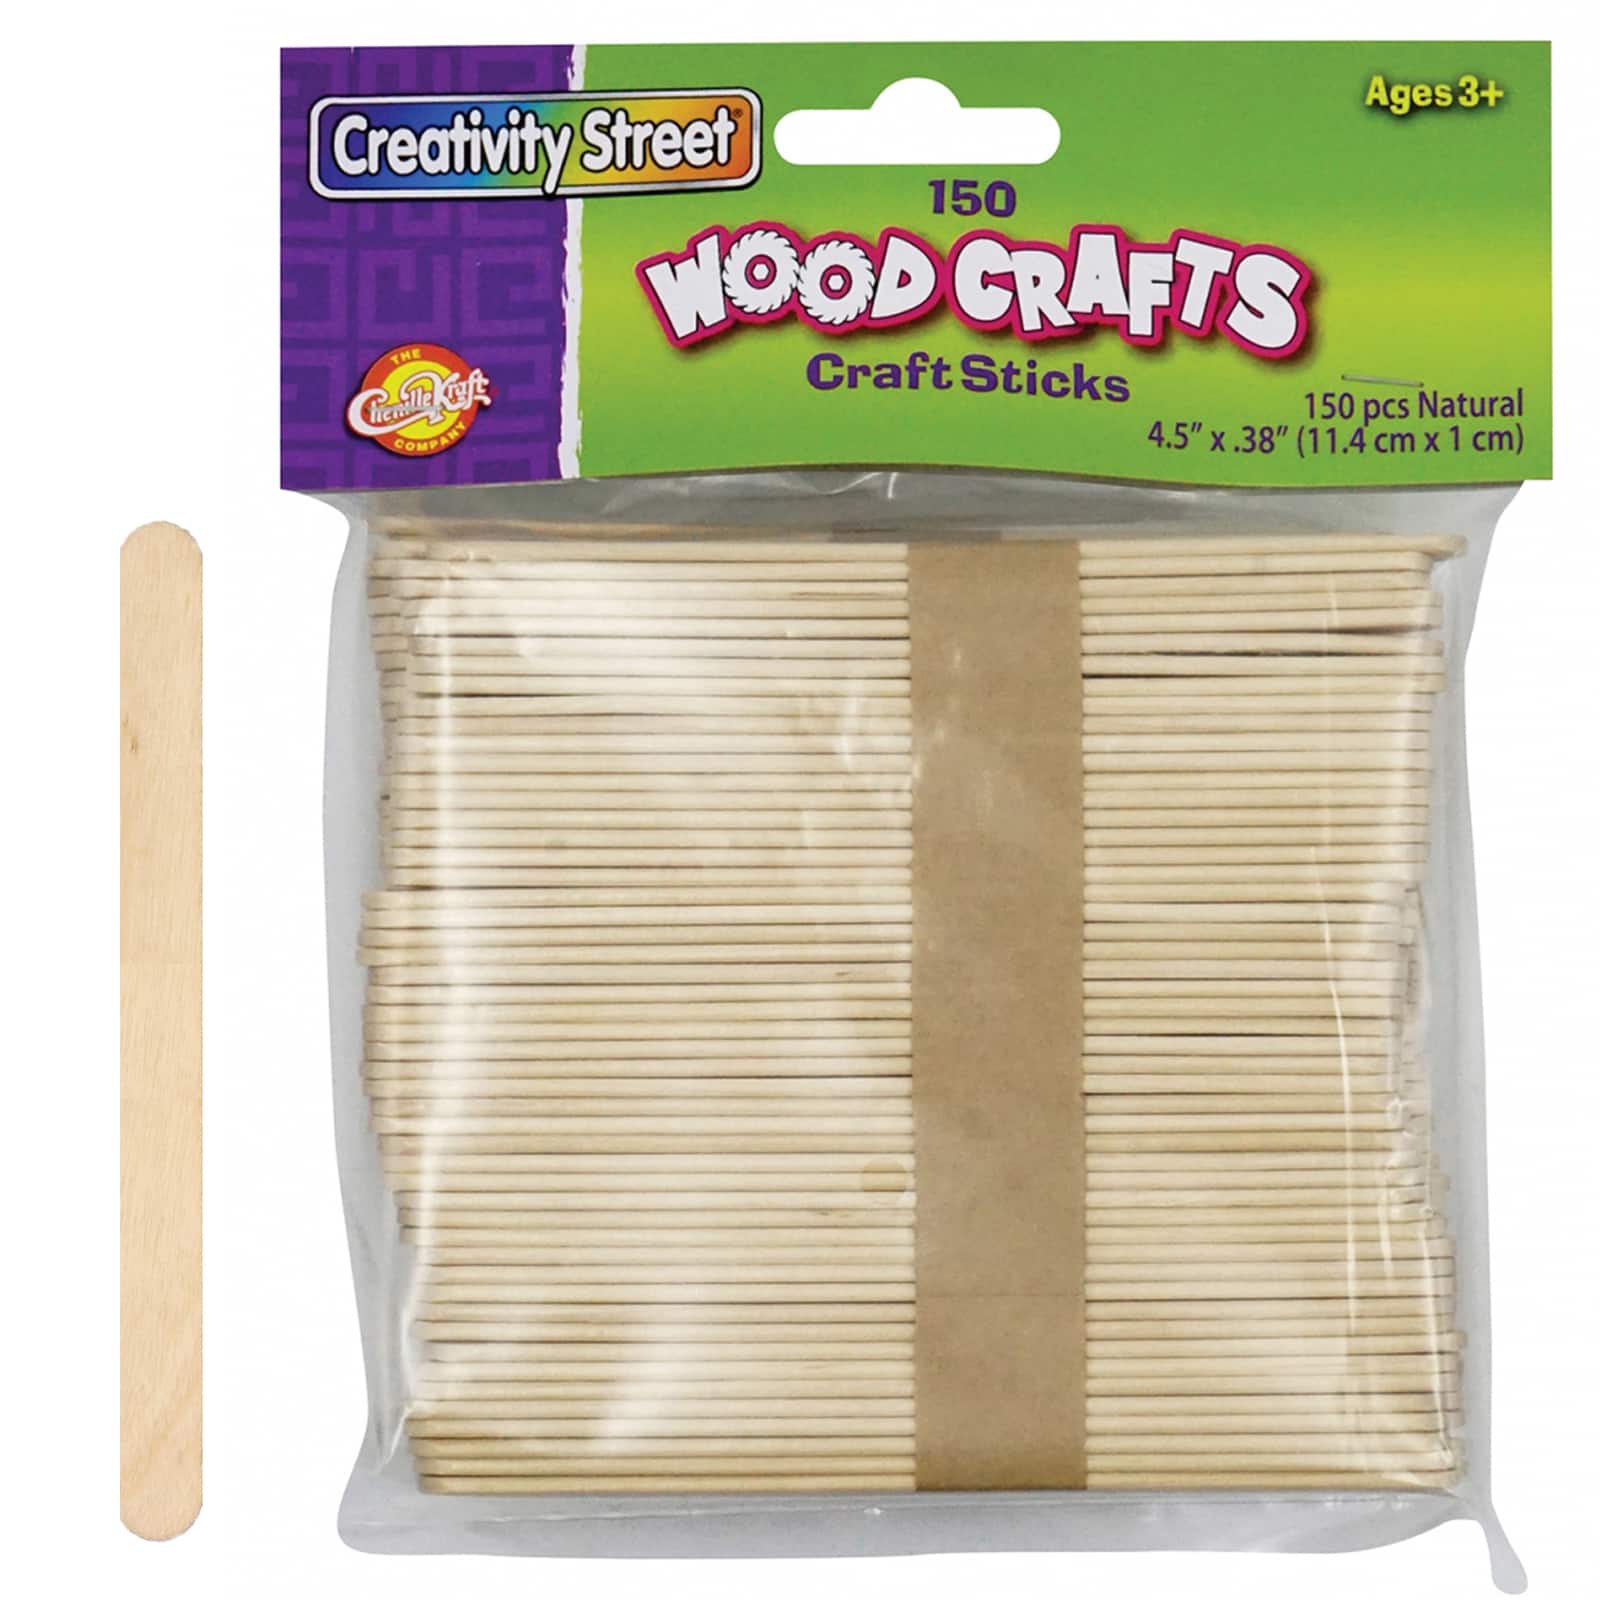 6 Packs: 12 Packs 150 ct. (10,800 total) Creativity Street&#xAE; Natural Wood Craft Sticks